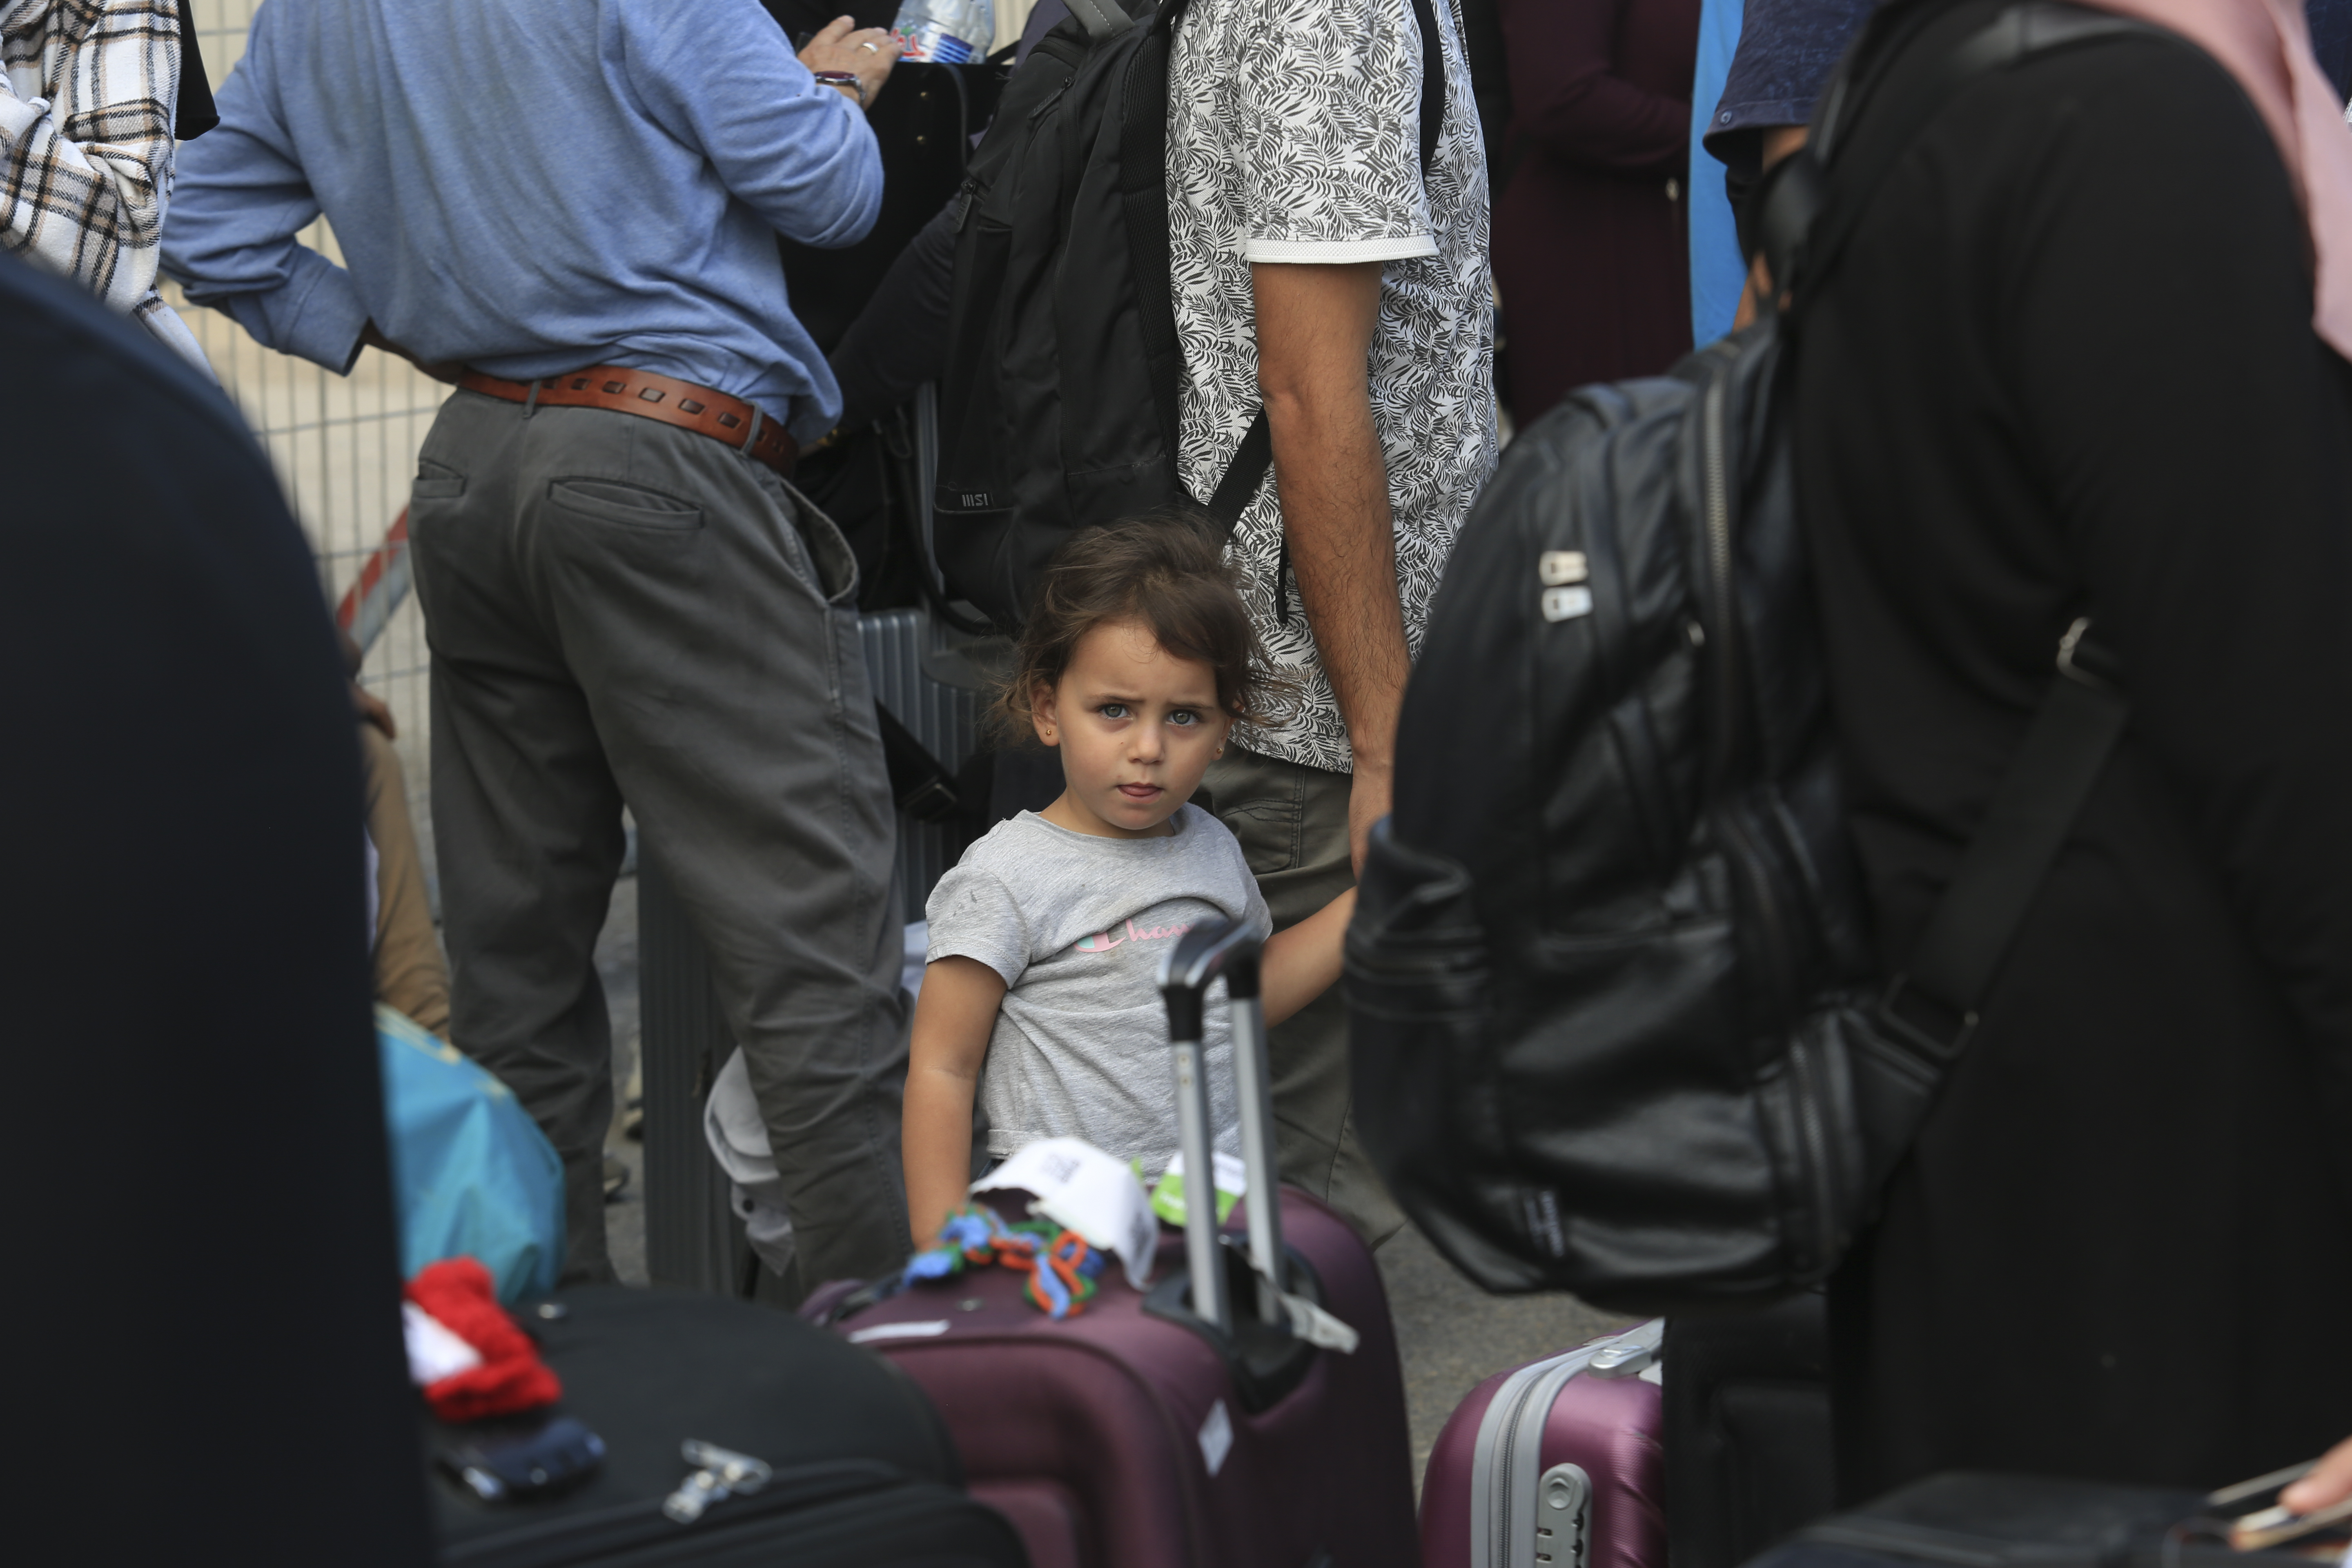 U.S. OKs non-emergency staff to leave Israel as Gazans seek safety. The latest